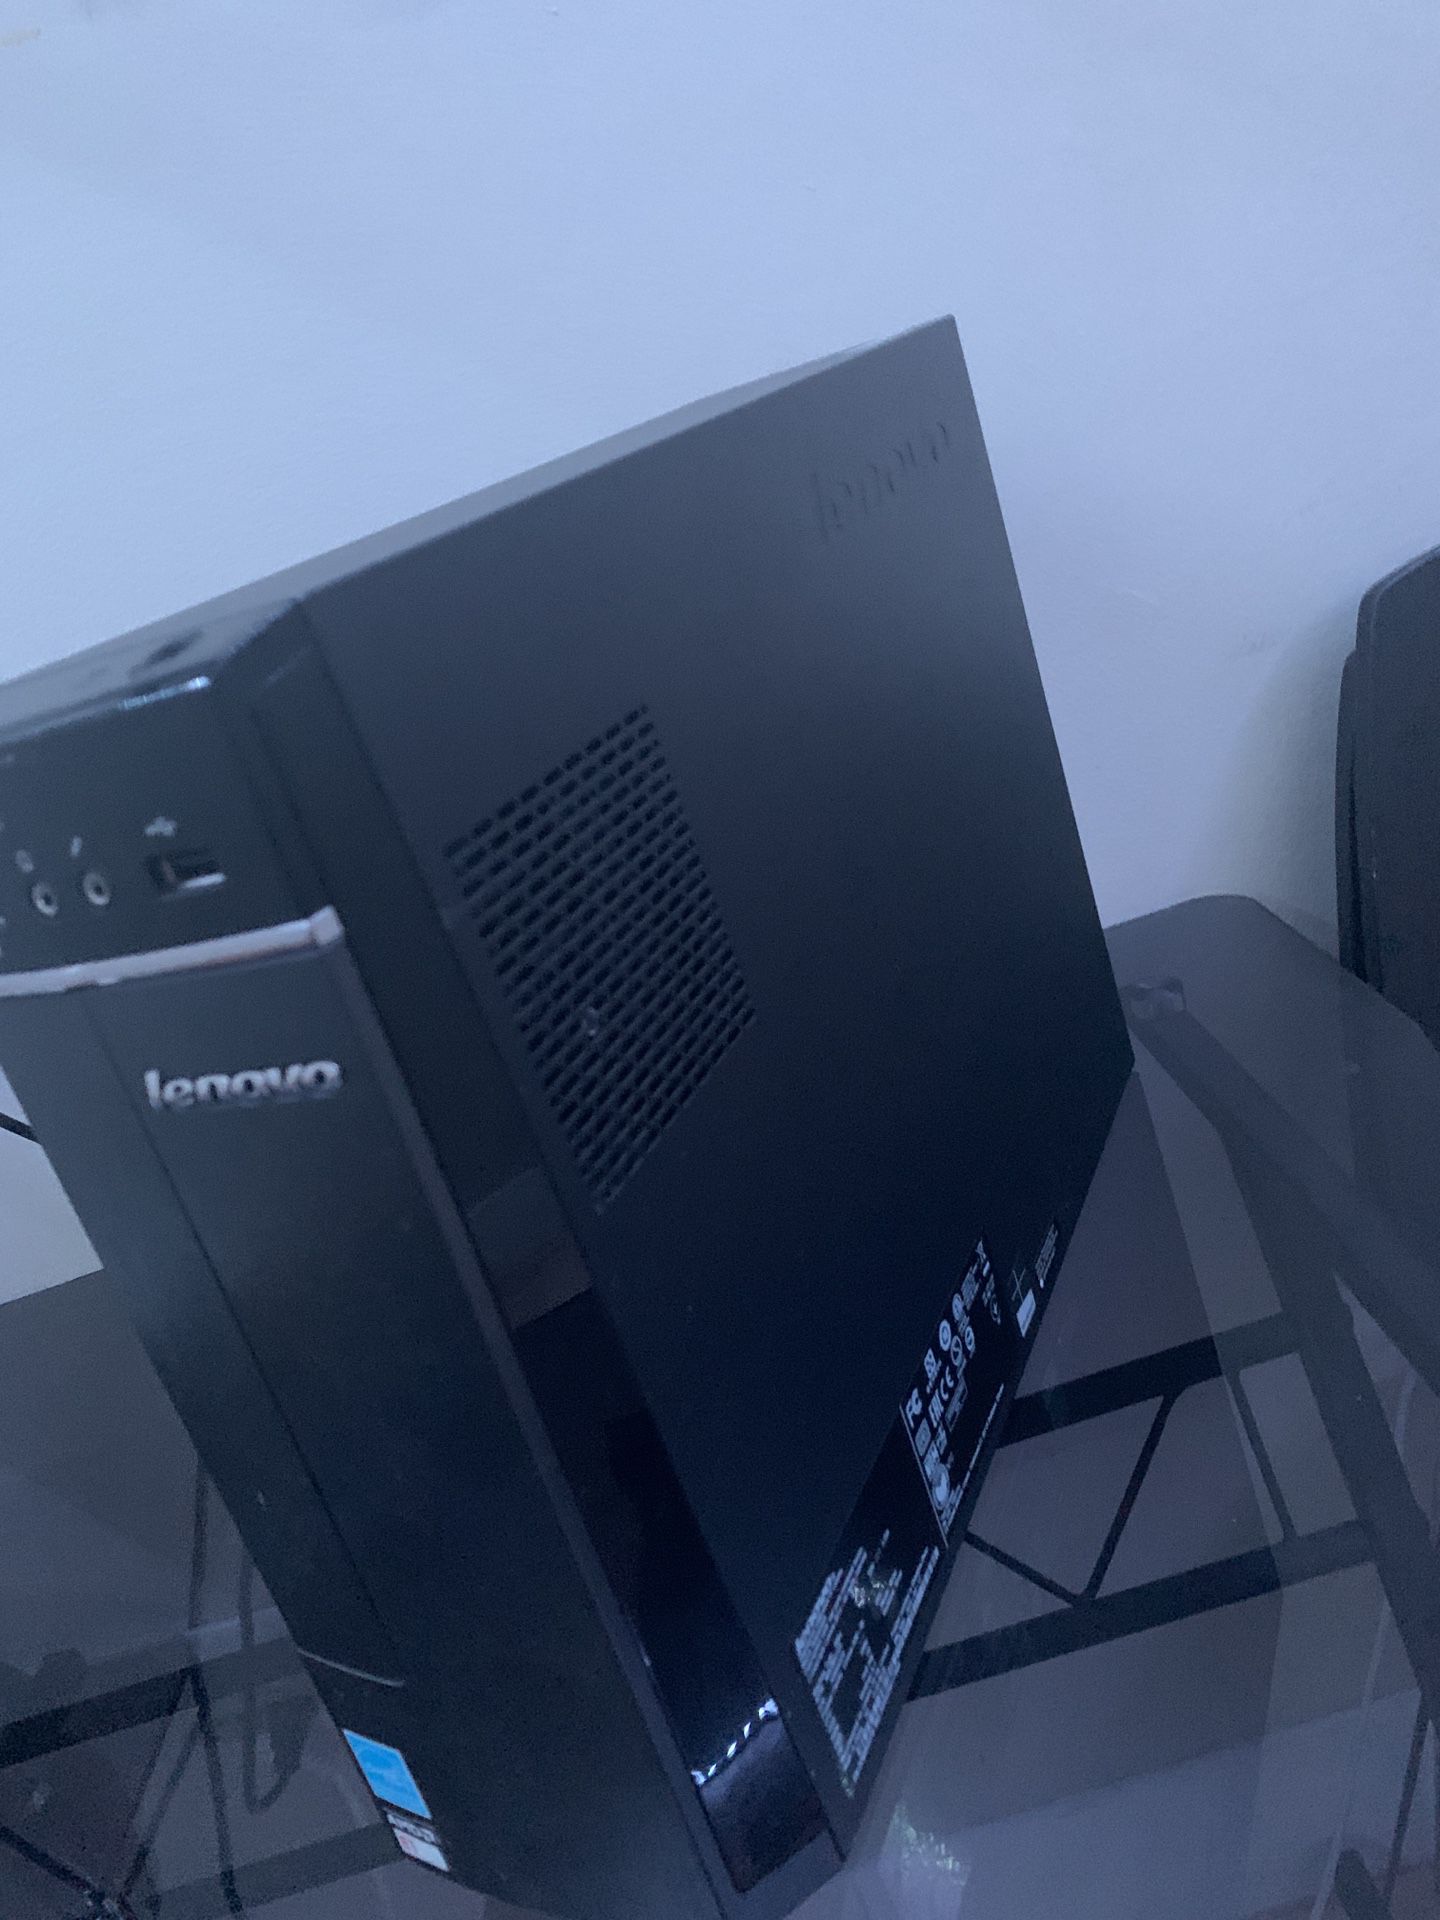 Lenovo computer with Dell monitor